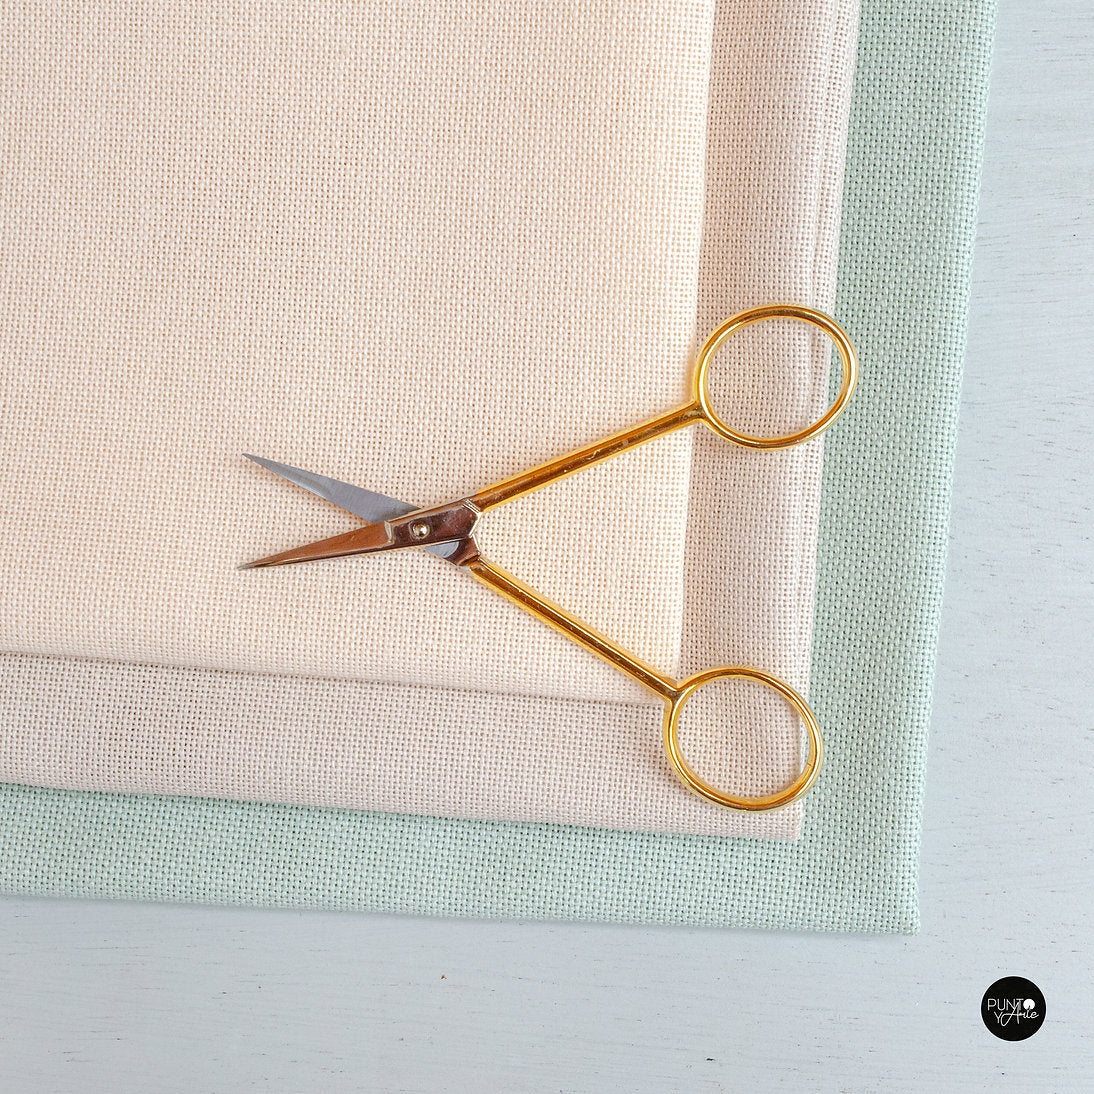 Precision Scissors for Cross Stitch Madeira Art. No. 9477: Quality and Precision in Every Cut